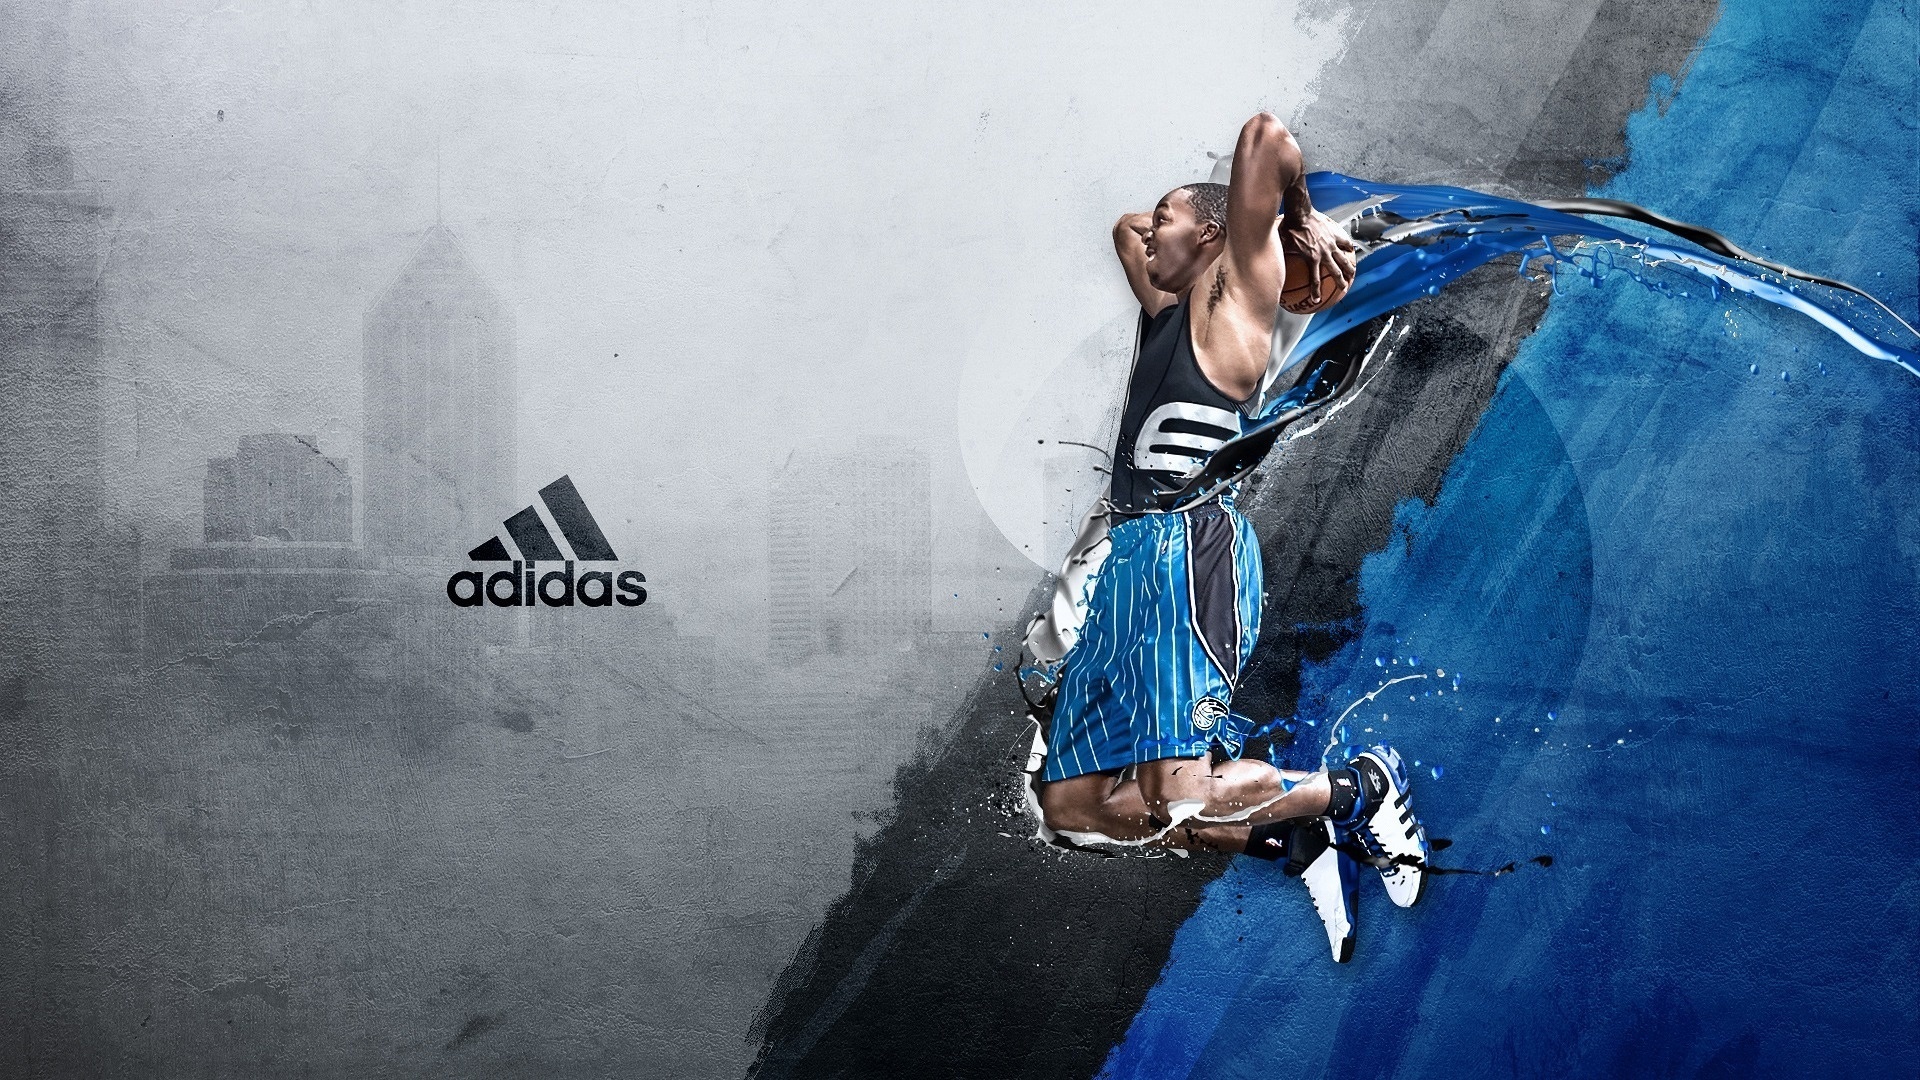 Adidas NBA Basketball HD wallpaper